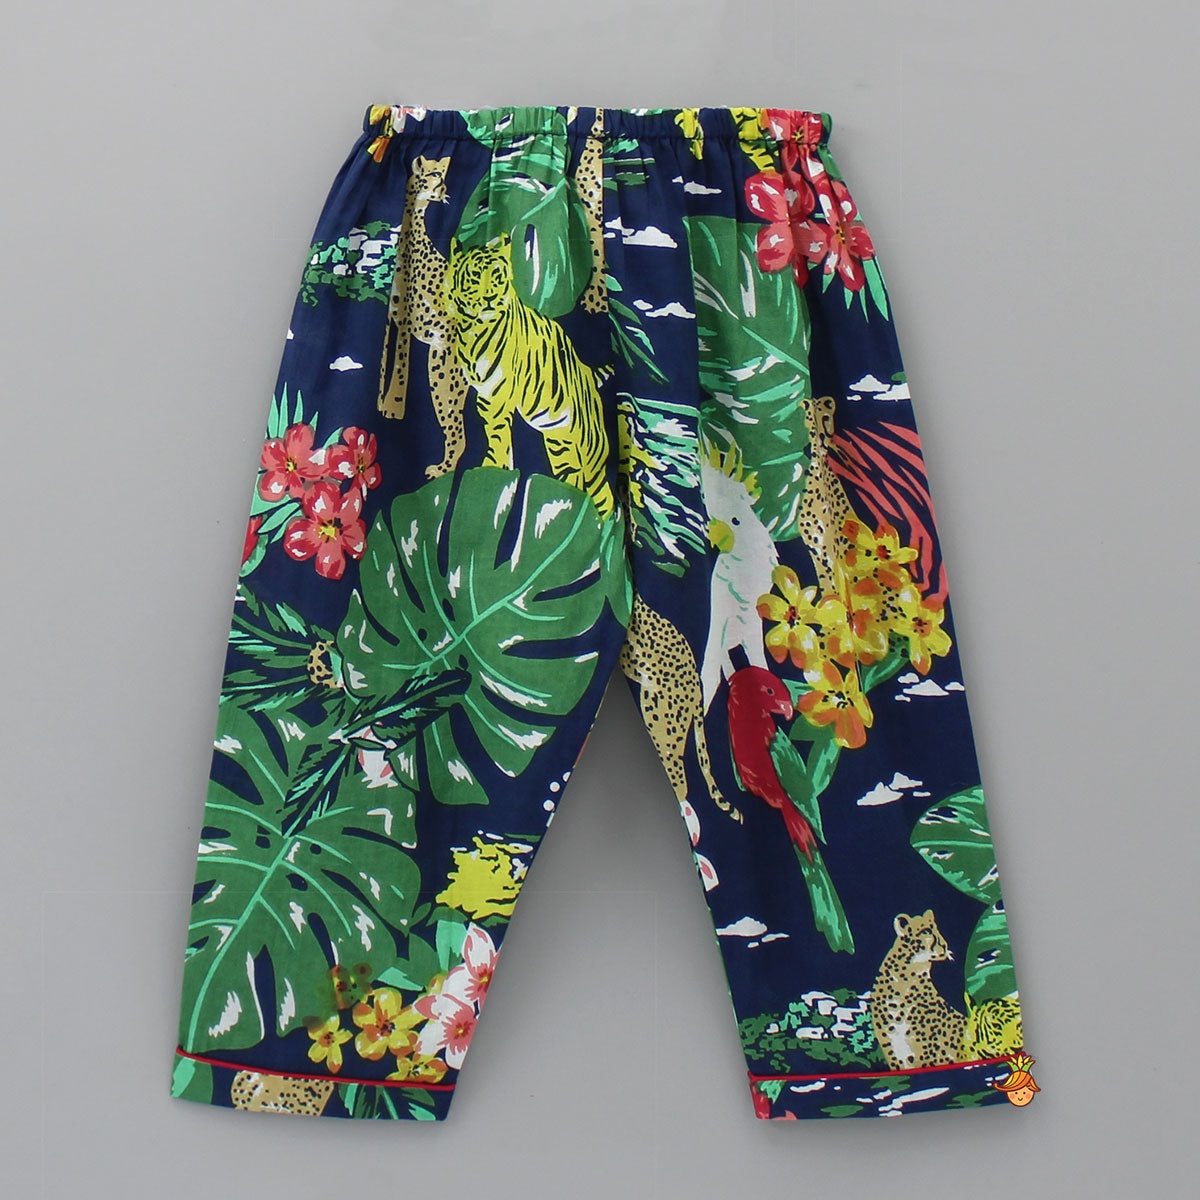 Jungle Theme Printed Cotton Sleepwear